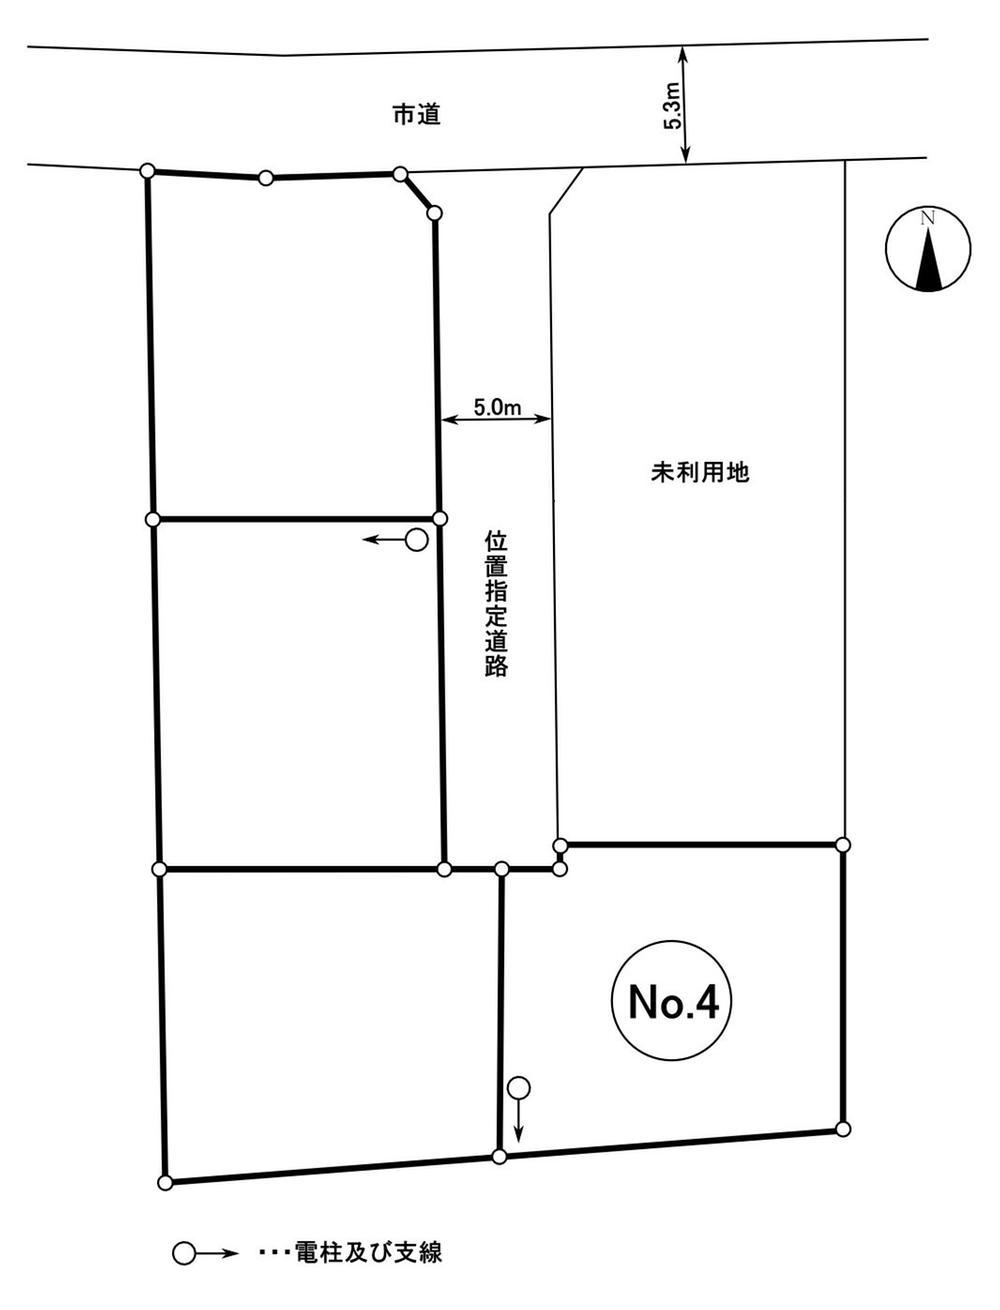 Compartment figure. Land price 6.8 million yen, Land area 182.07 sq m